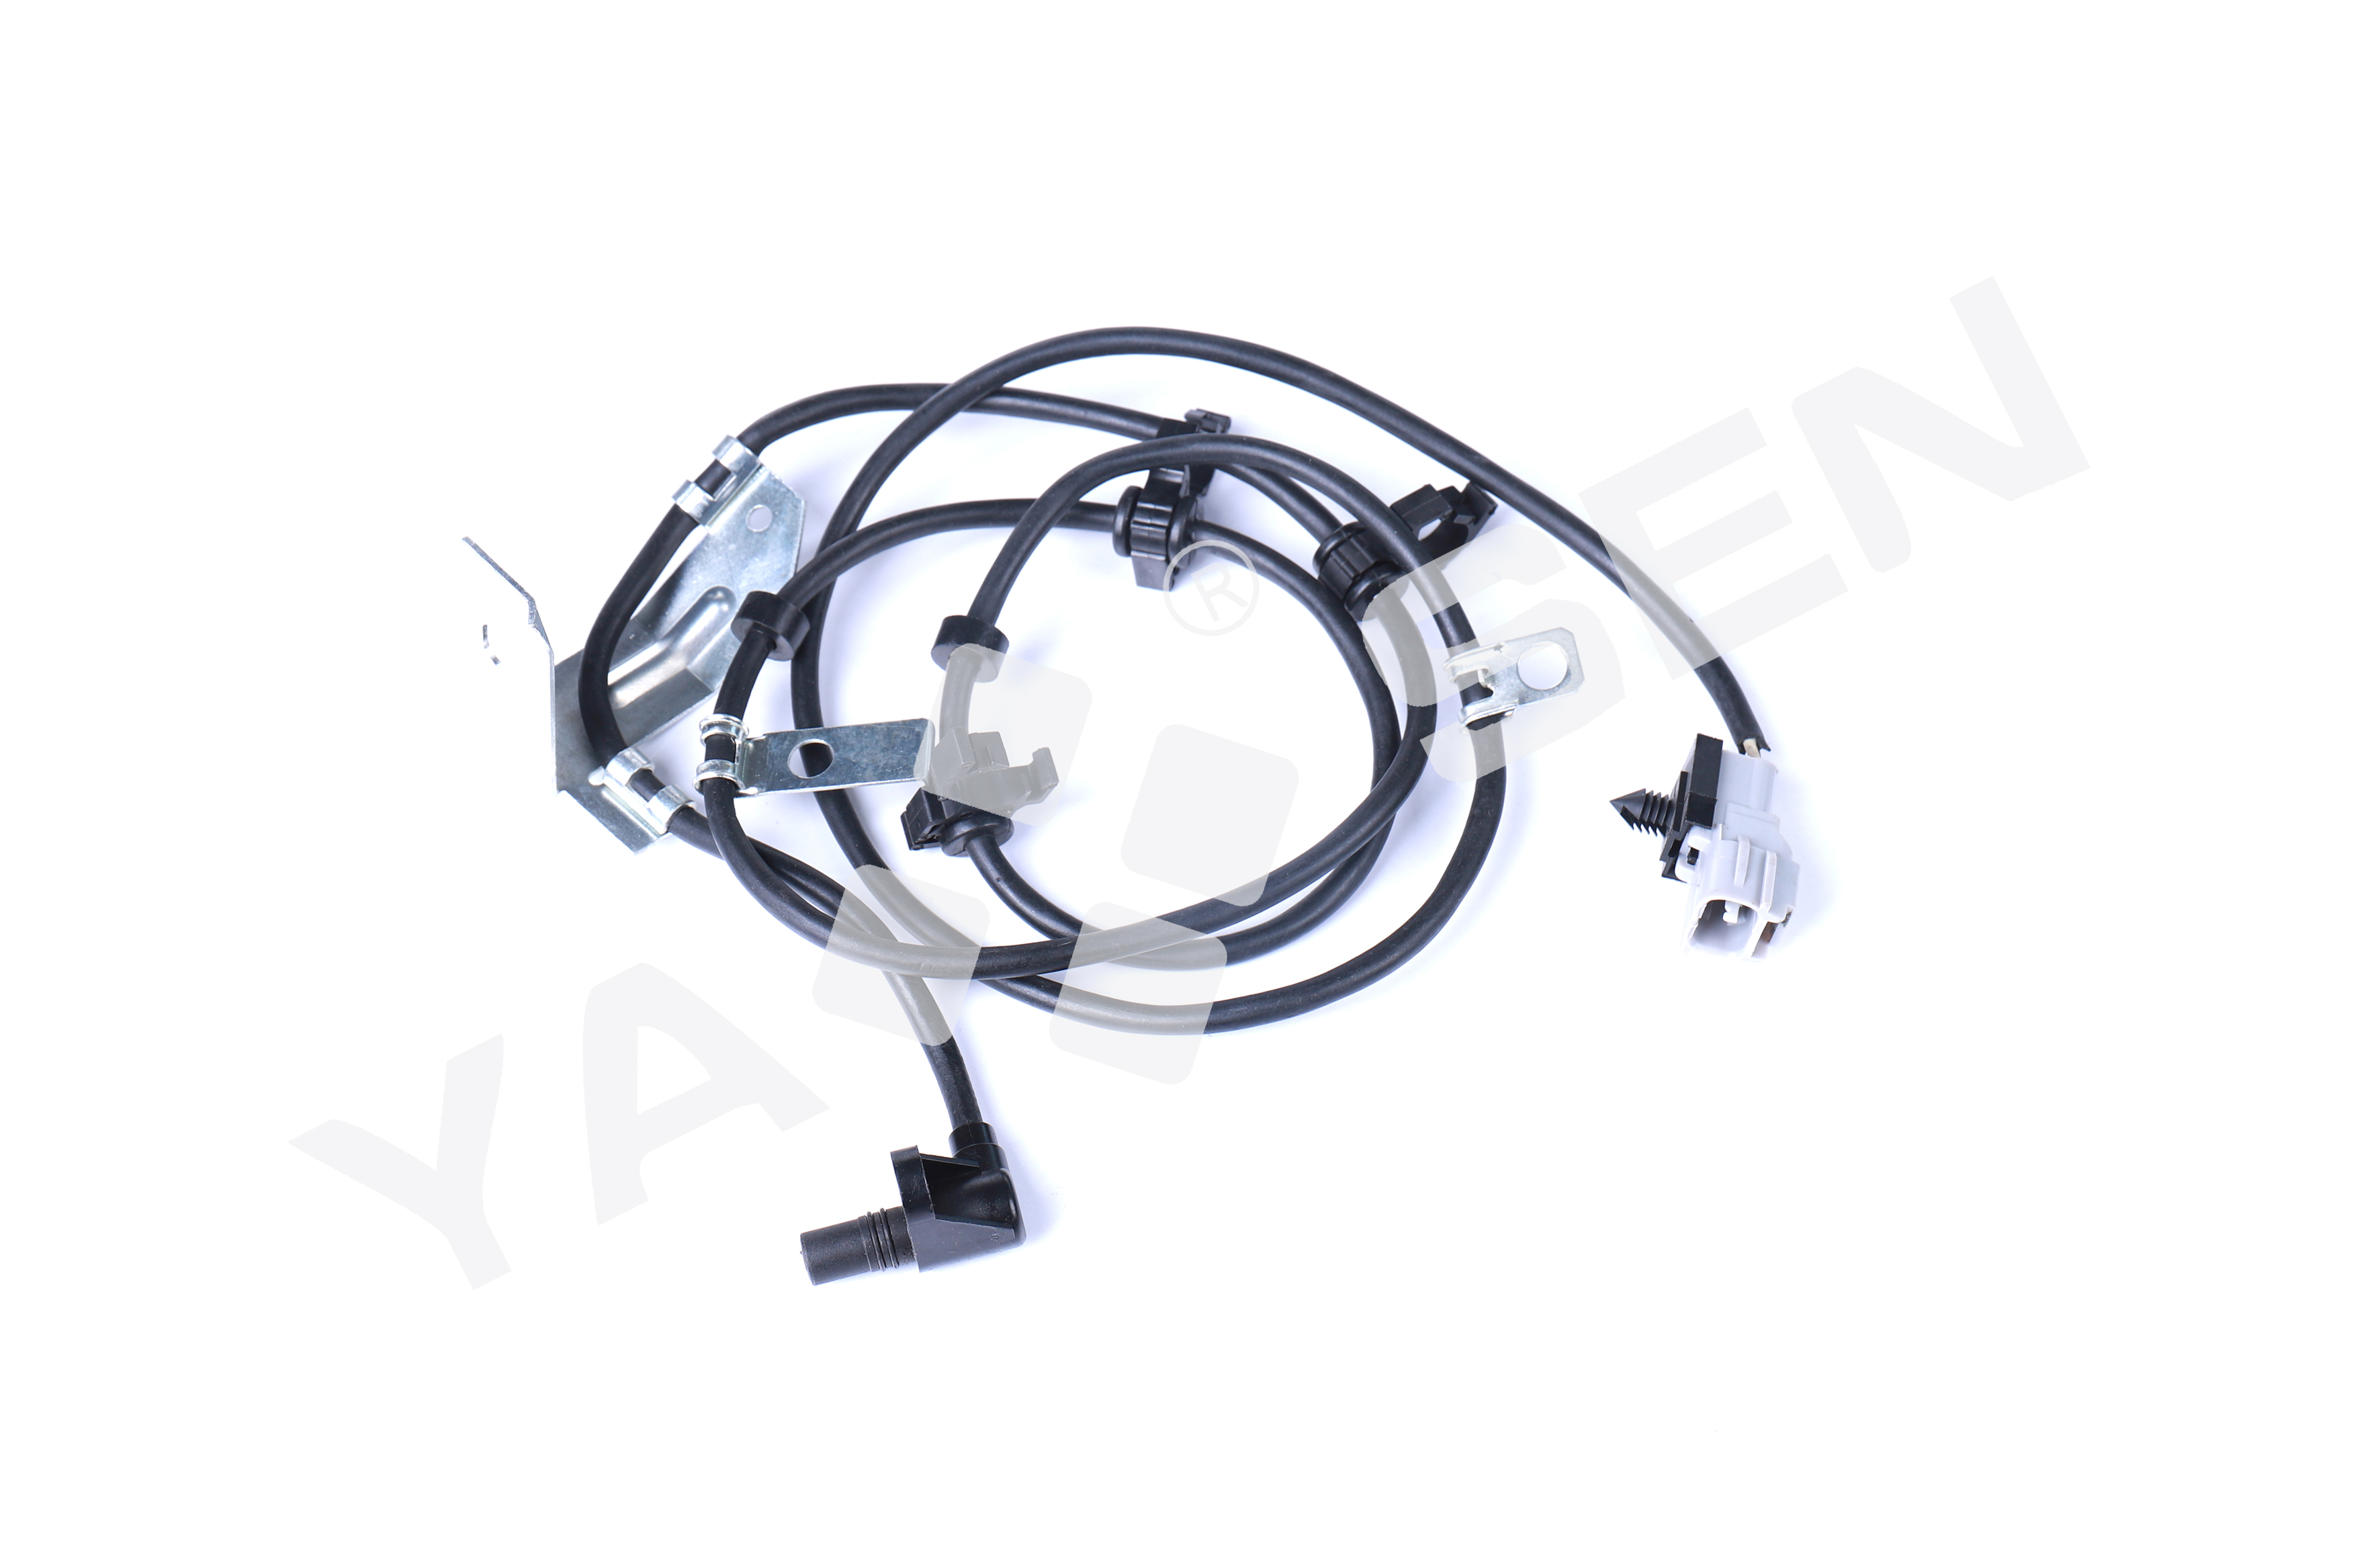 ABS Wheel Speed Sensor for CHEVROLET/DODGE, 5S10631 1802-304035 SU12084 72-5471 ABS36 5010257AA 5010257AA ALS235 5010257AB